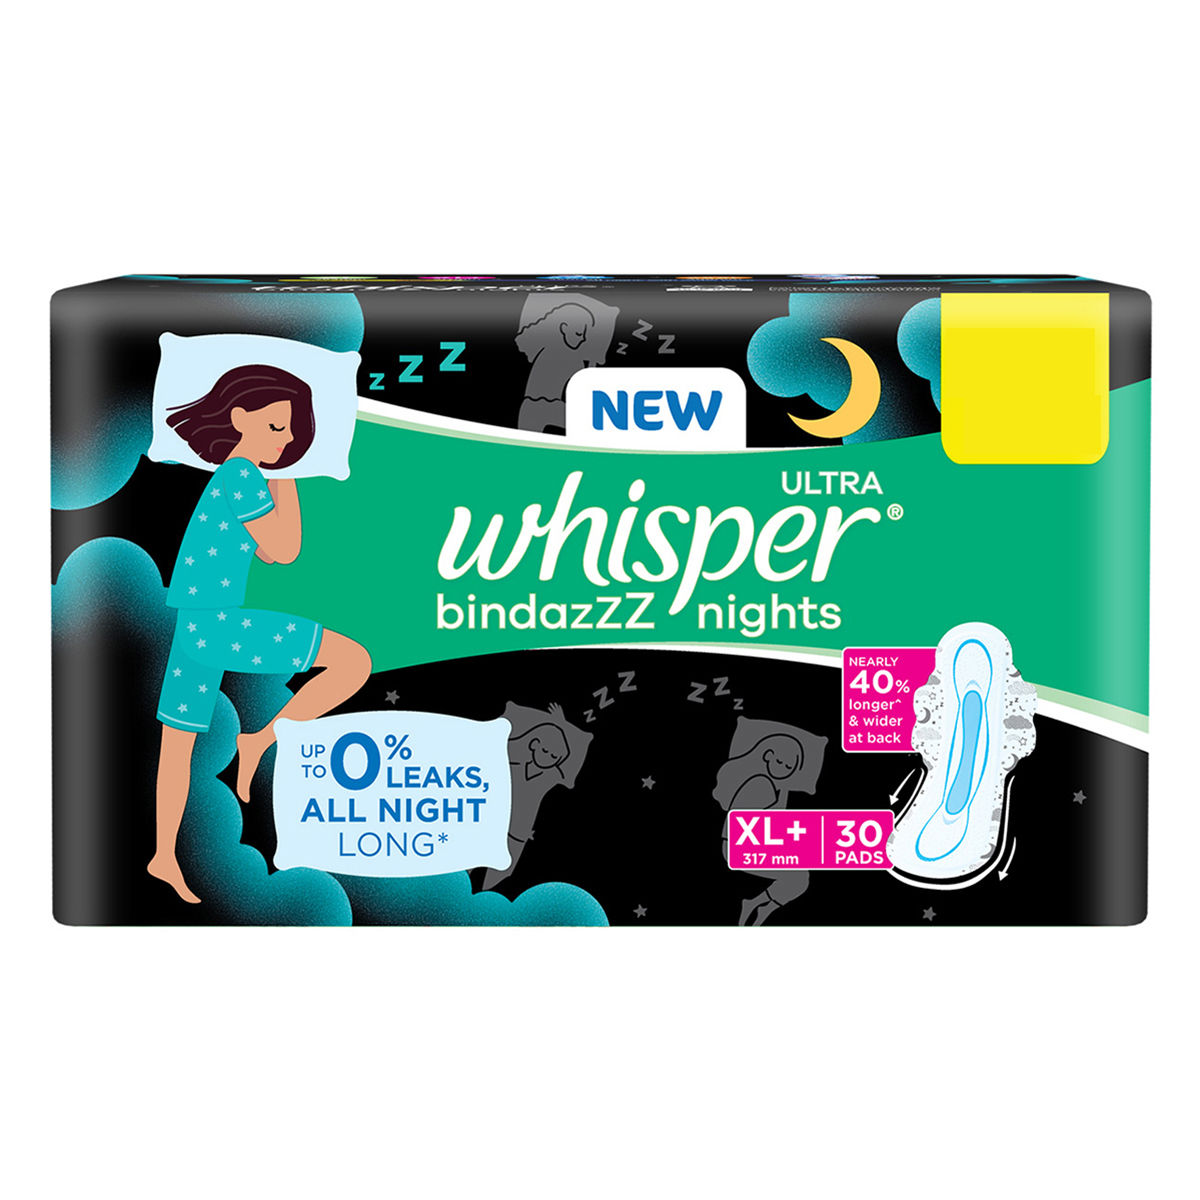 Buy Whisper Ultra Bindazzz Nights Sanitary Pads XL+, 30 Count Online